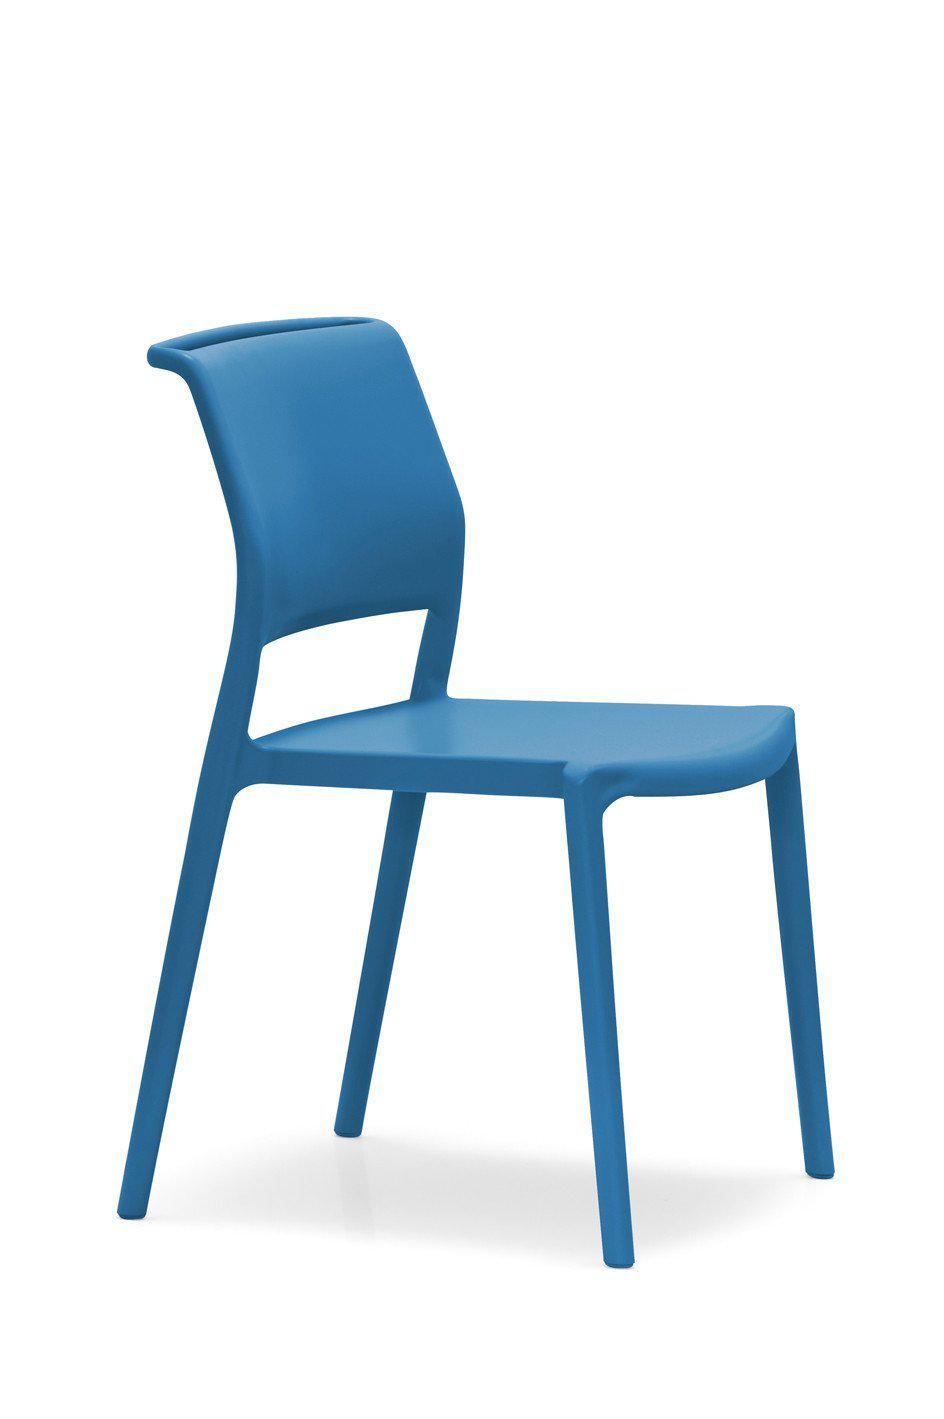 Ara 310 Side Chair-Pedrali-Contract Furniture Store